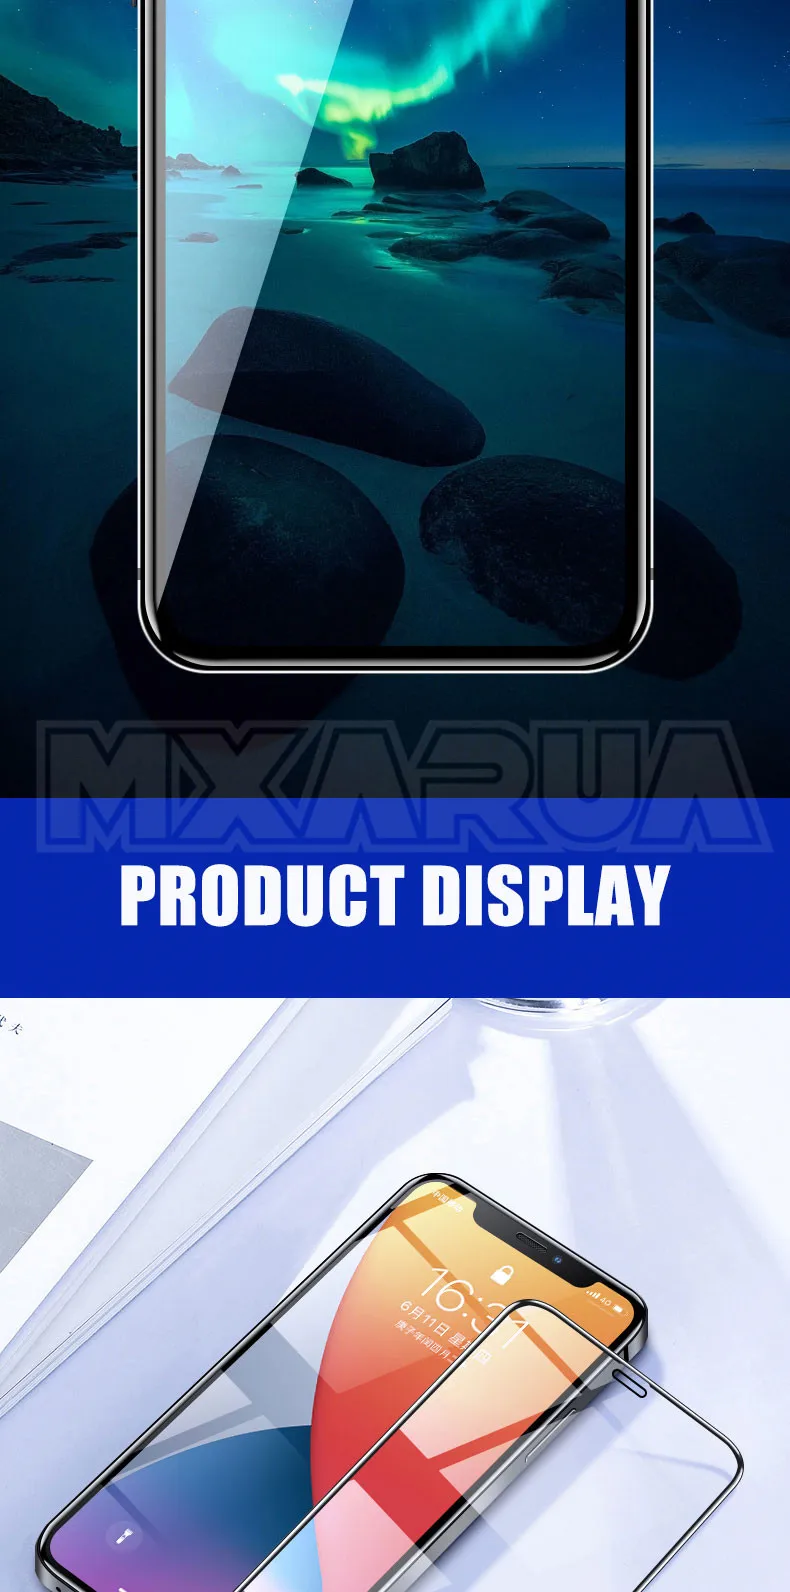 iphone 8 glass screen protector 2000D מעוקל מגן זכוכית עבור iphone 6 6S 7 8 בתוספת SE מסך מגן על iphone X XR XS 11 12 פרו מקס מזג זכוכית מקרה iphone 8 screen protector